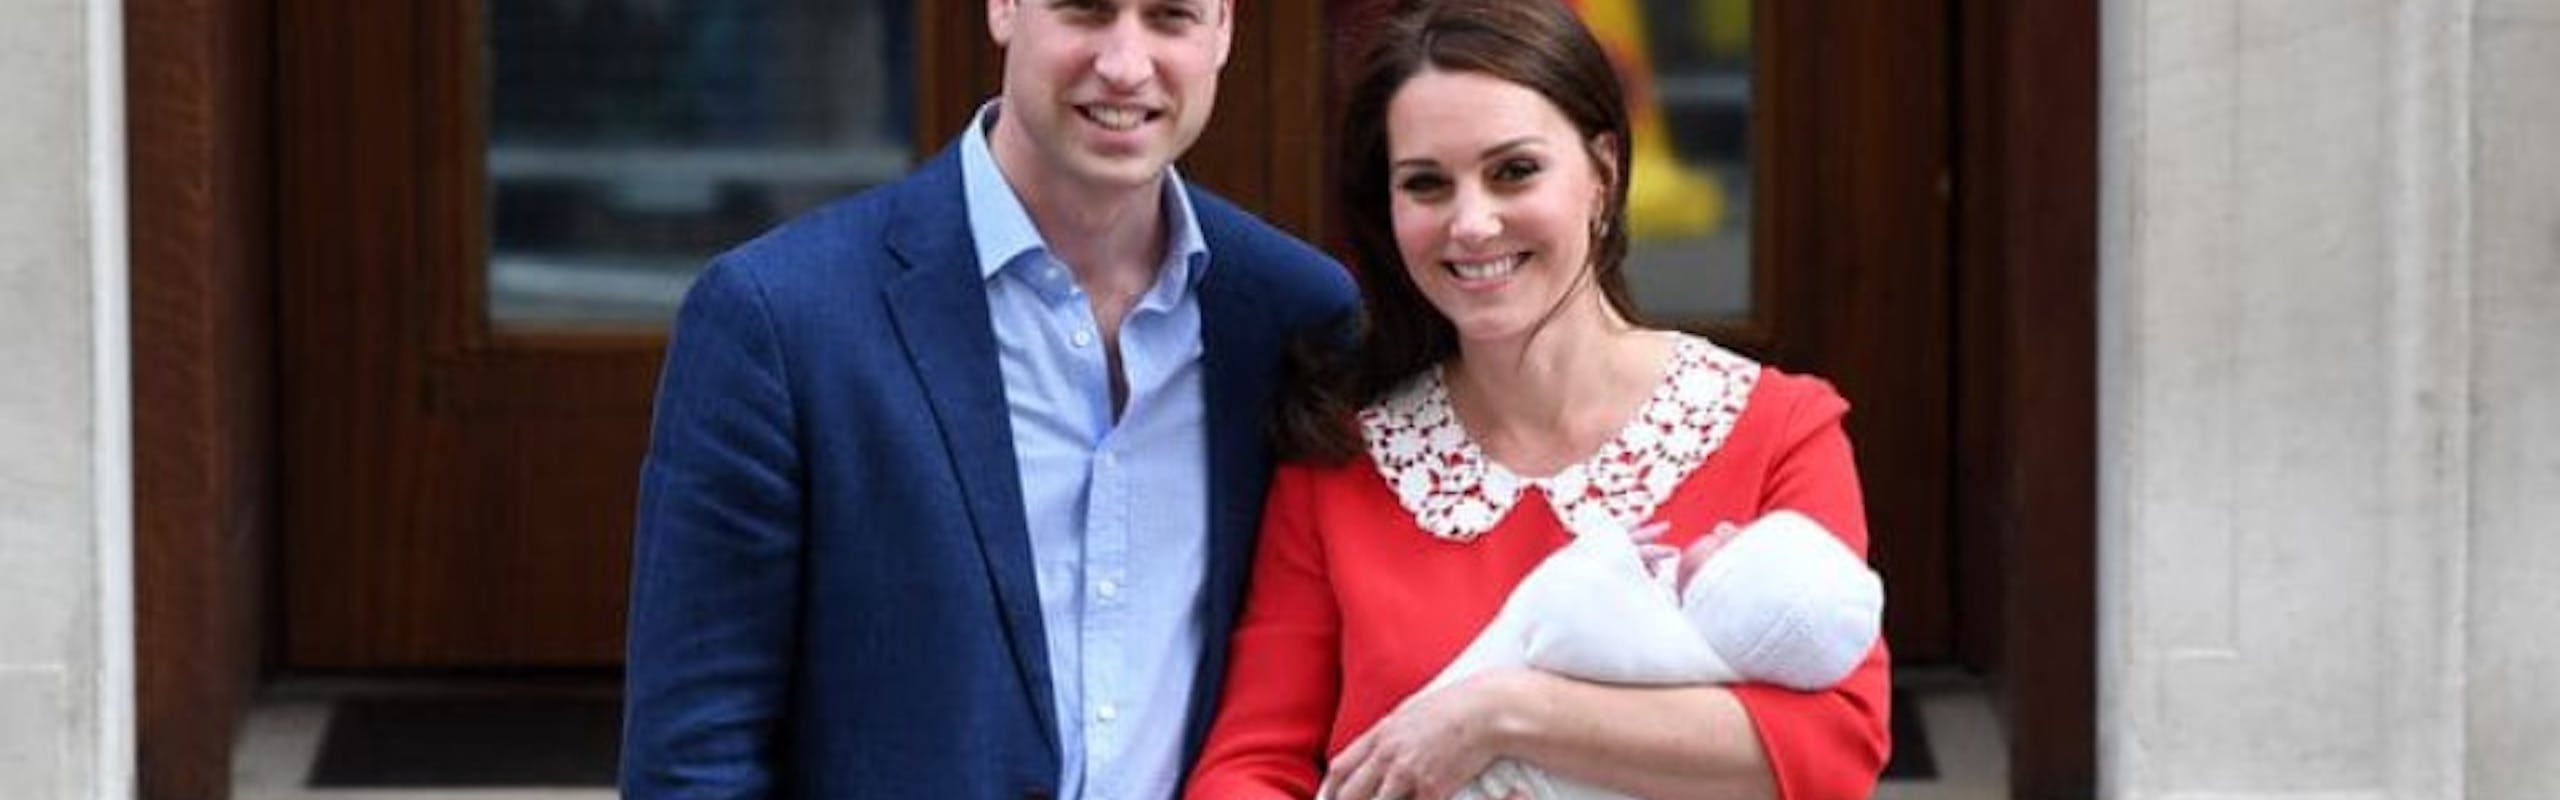 Príncipe William e Kate Midleton